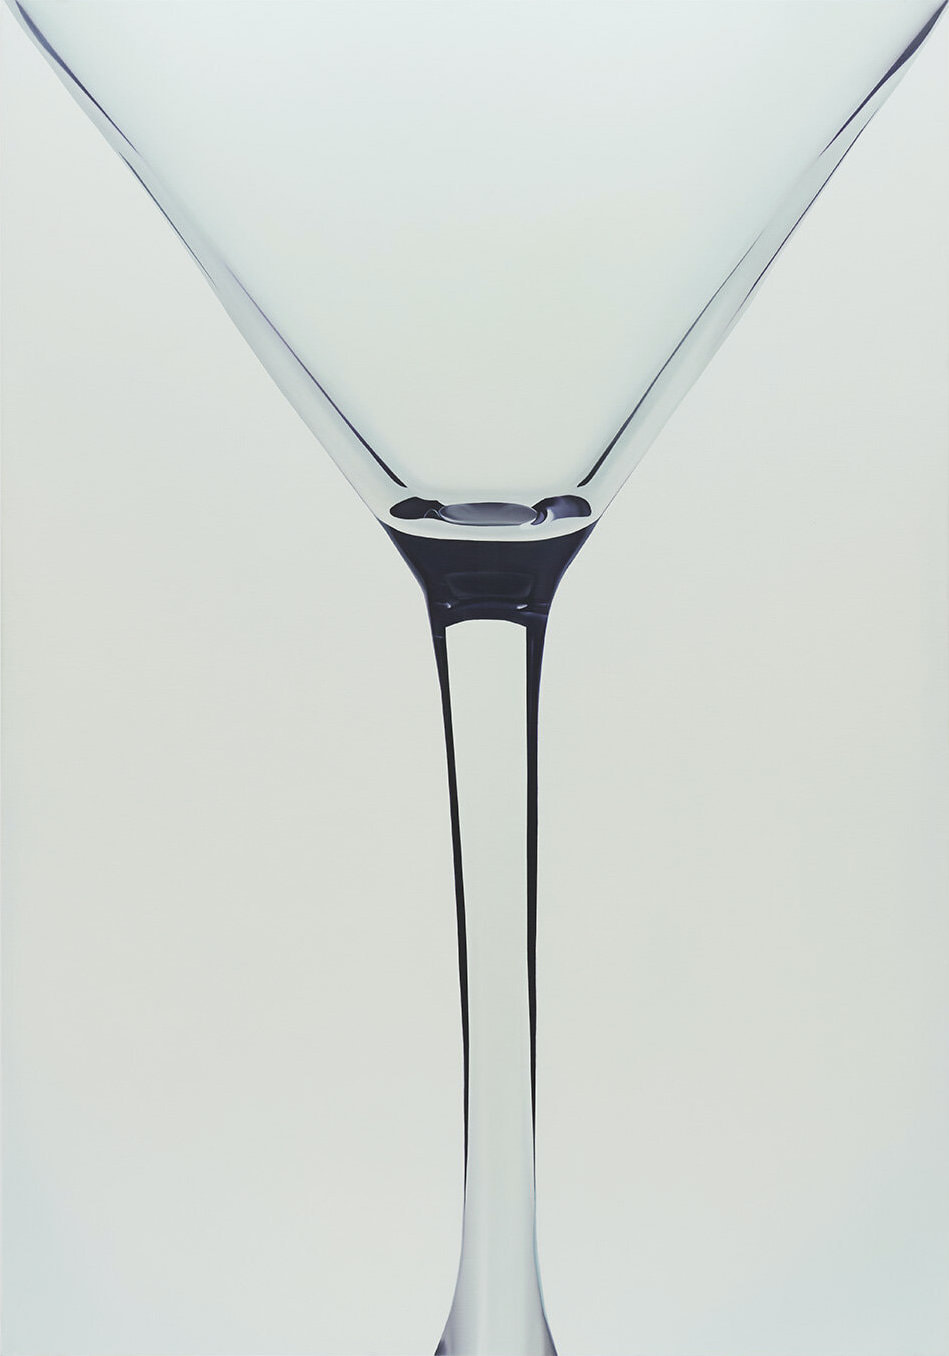 Vivian Greven, Y I, 2019, oil on canvas, 200 x 140 cm